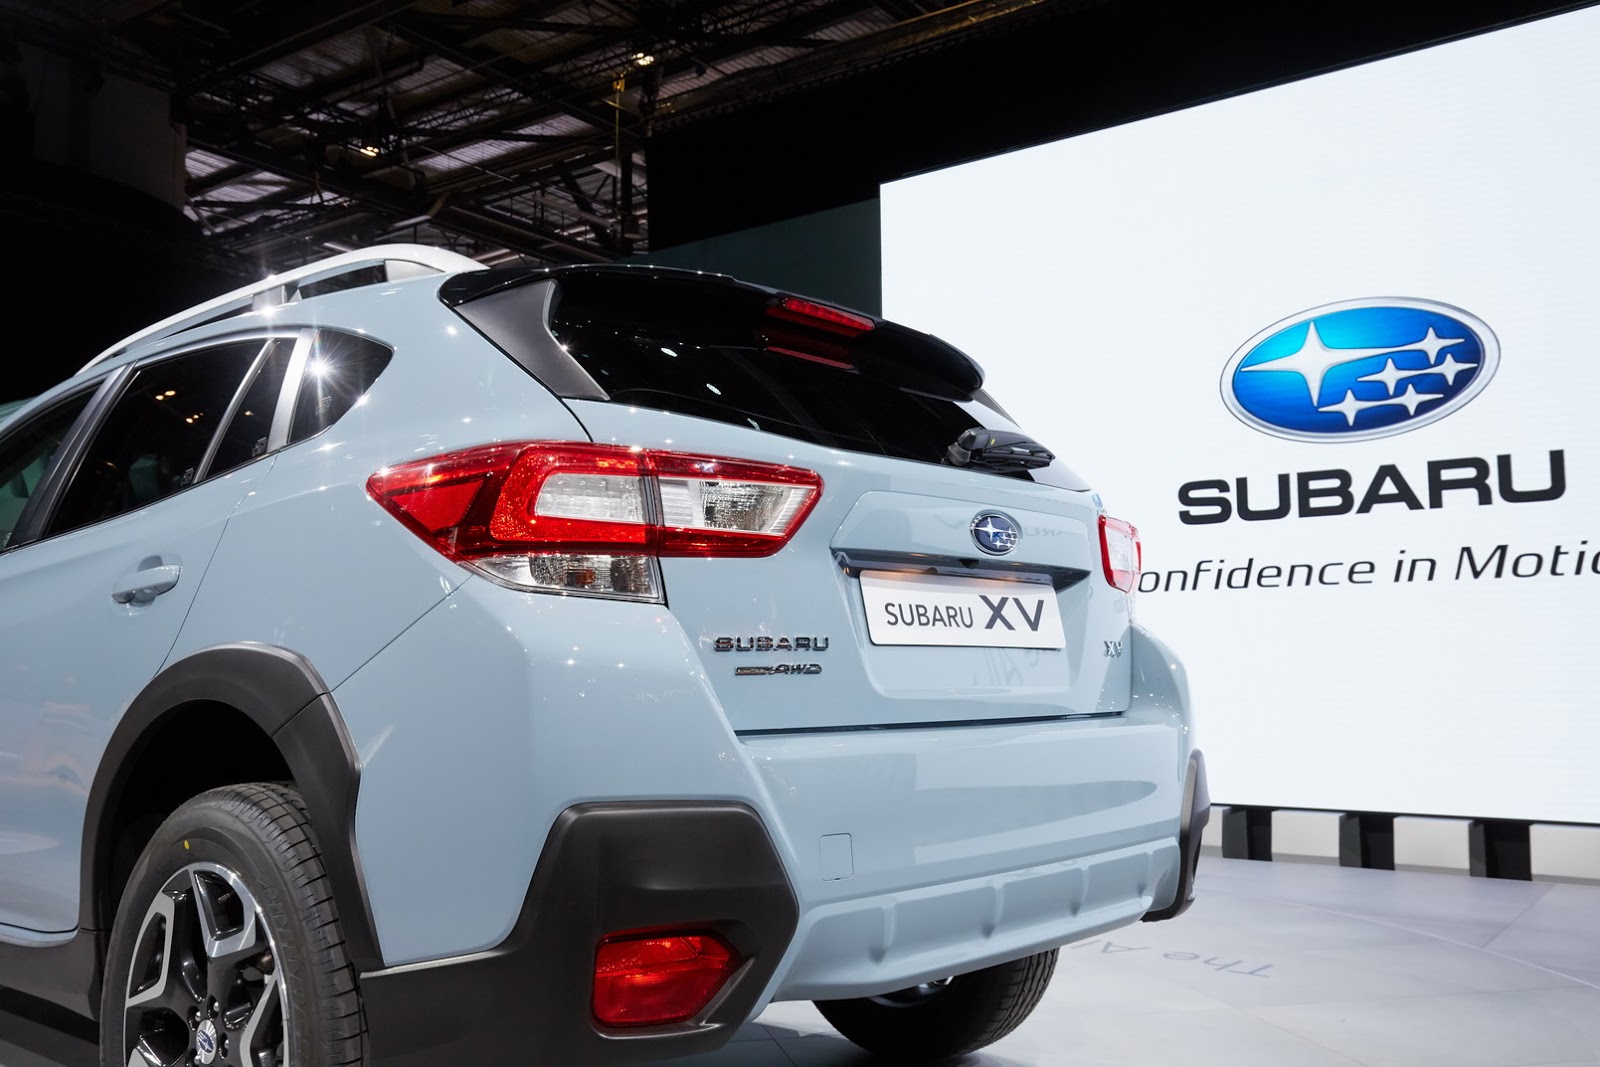 2018 Subaru XV Is Here With Familiar Looks, New Platform